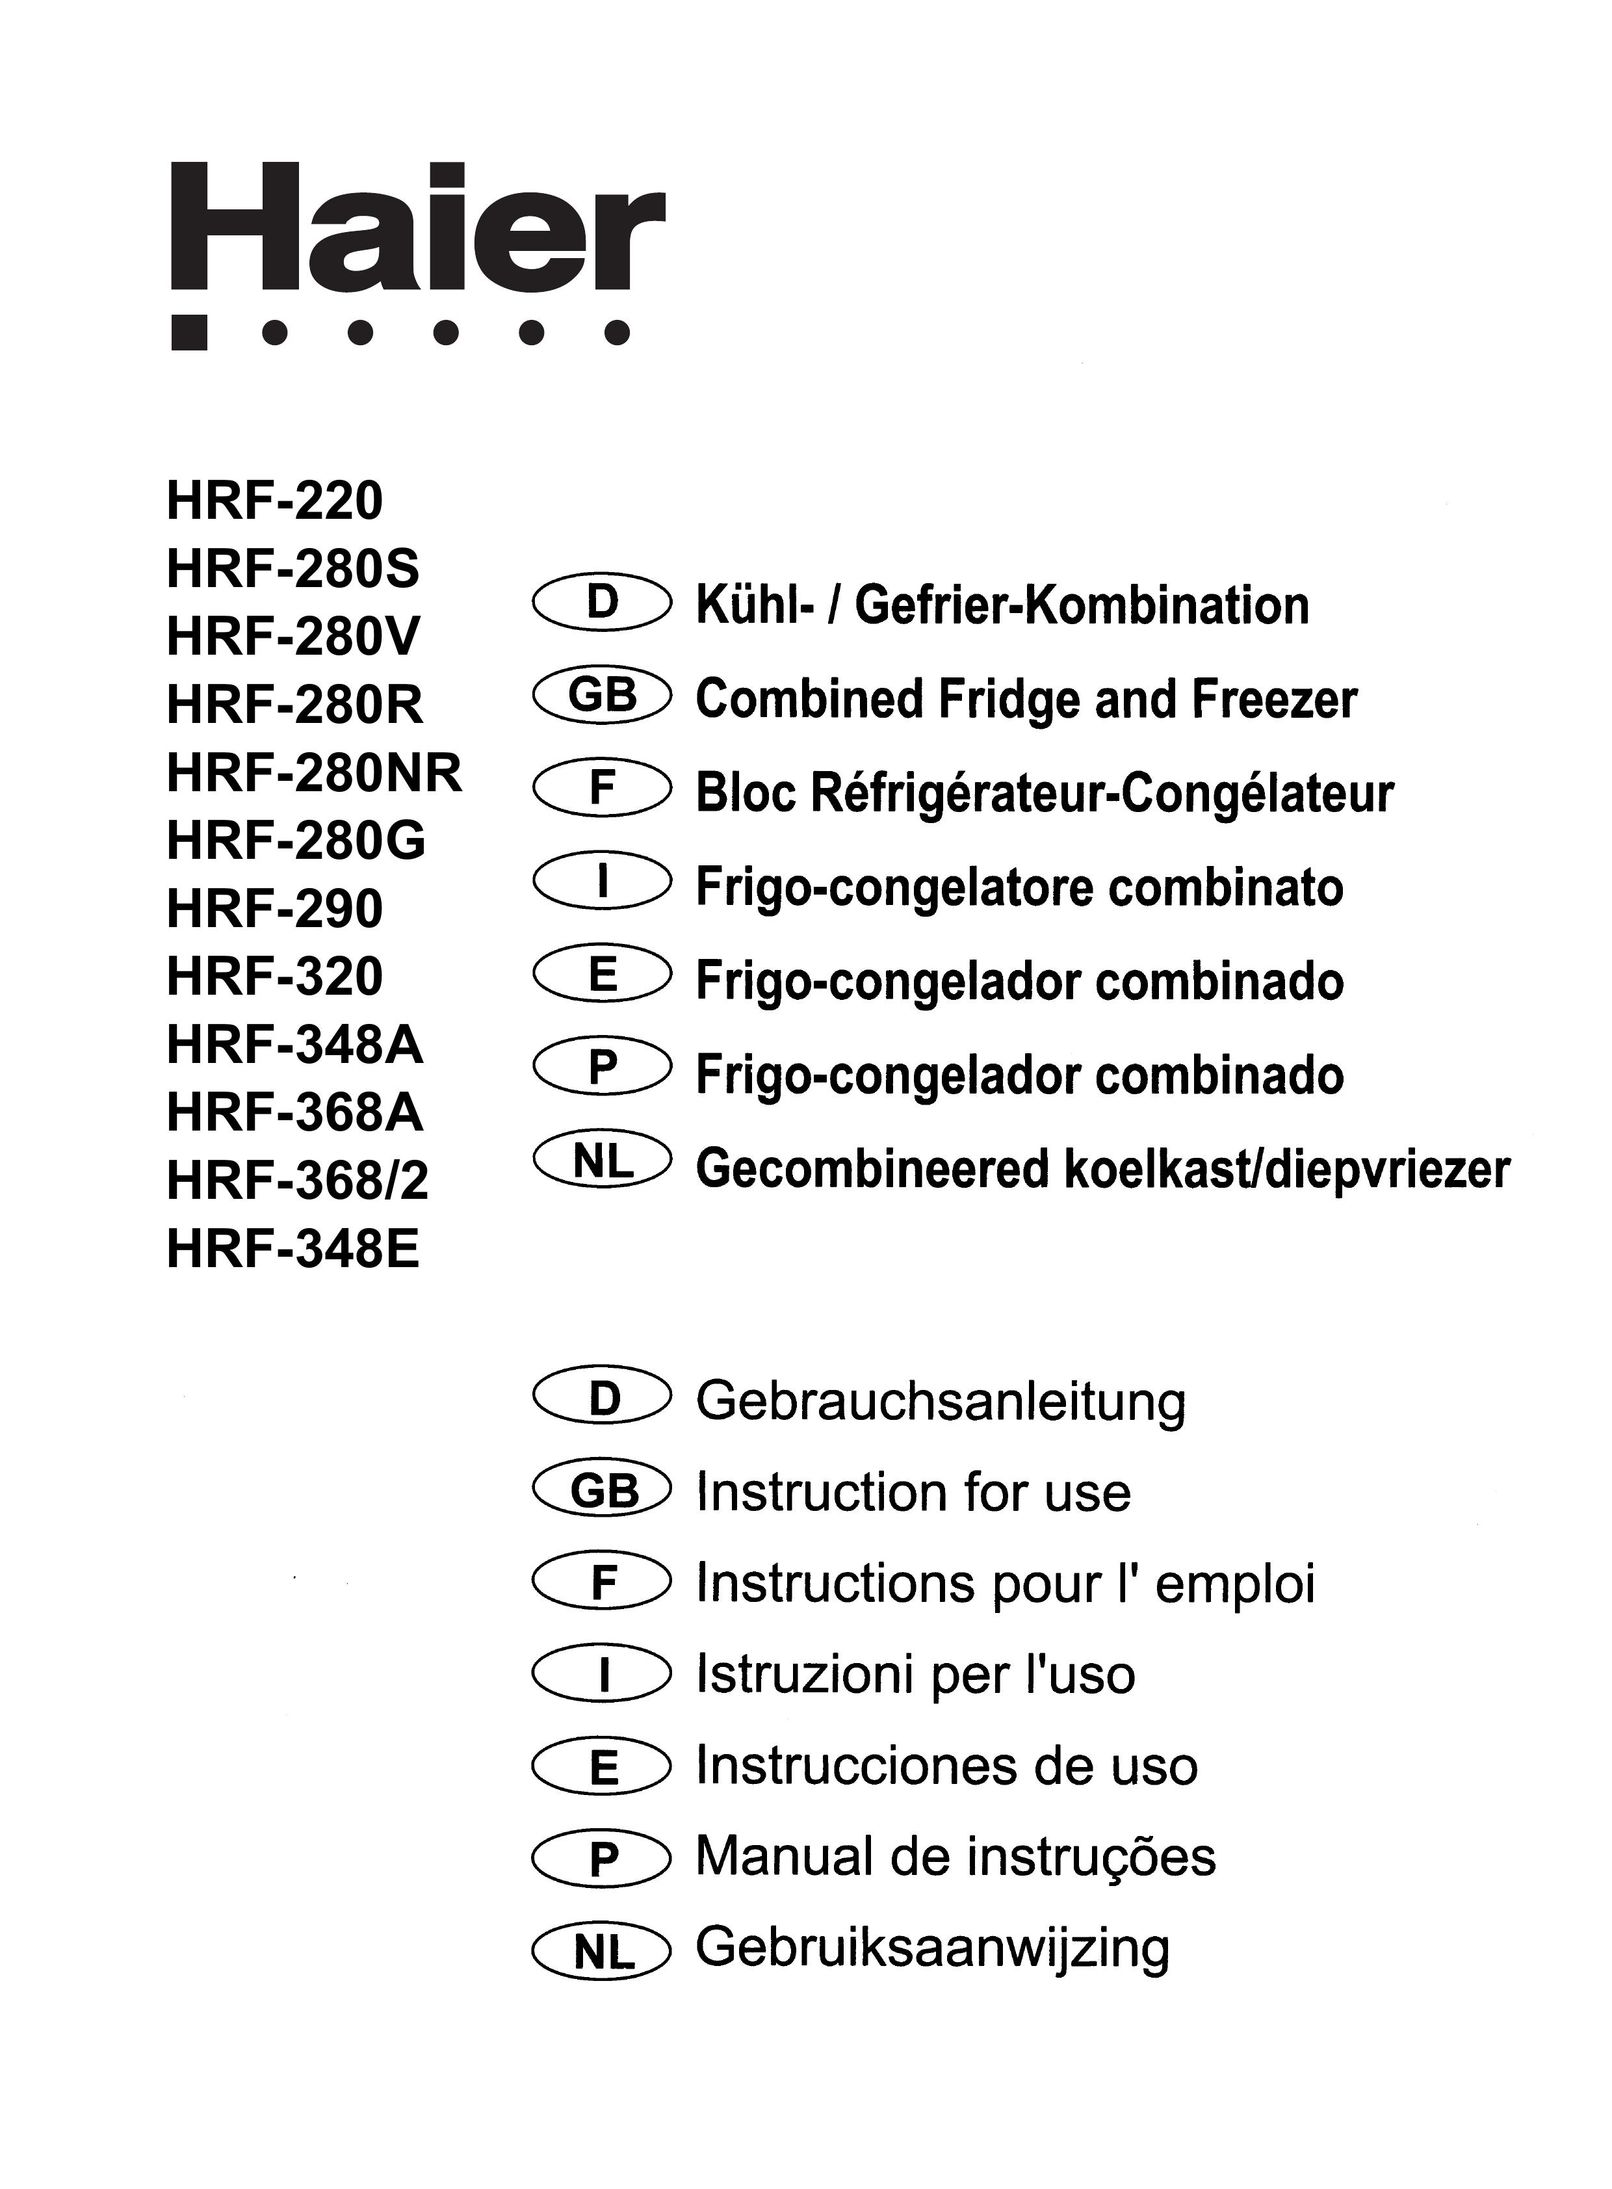 Haier HRF-348E Saw User Manual